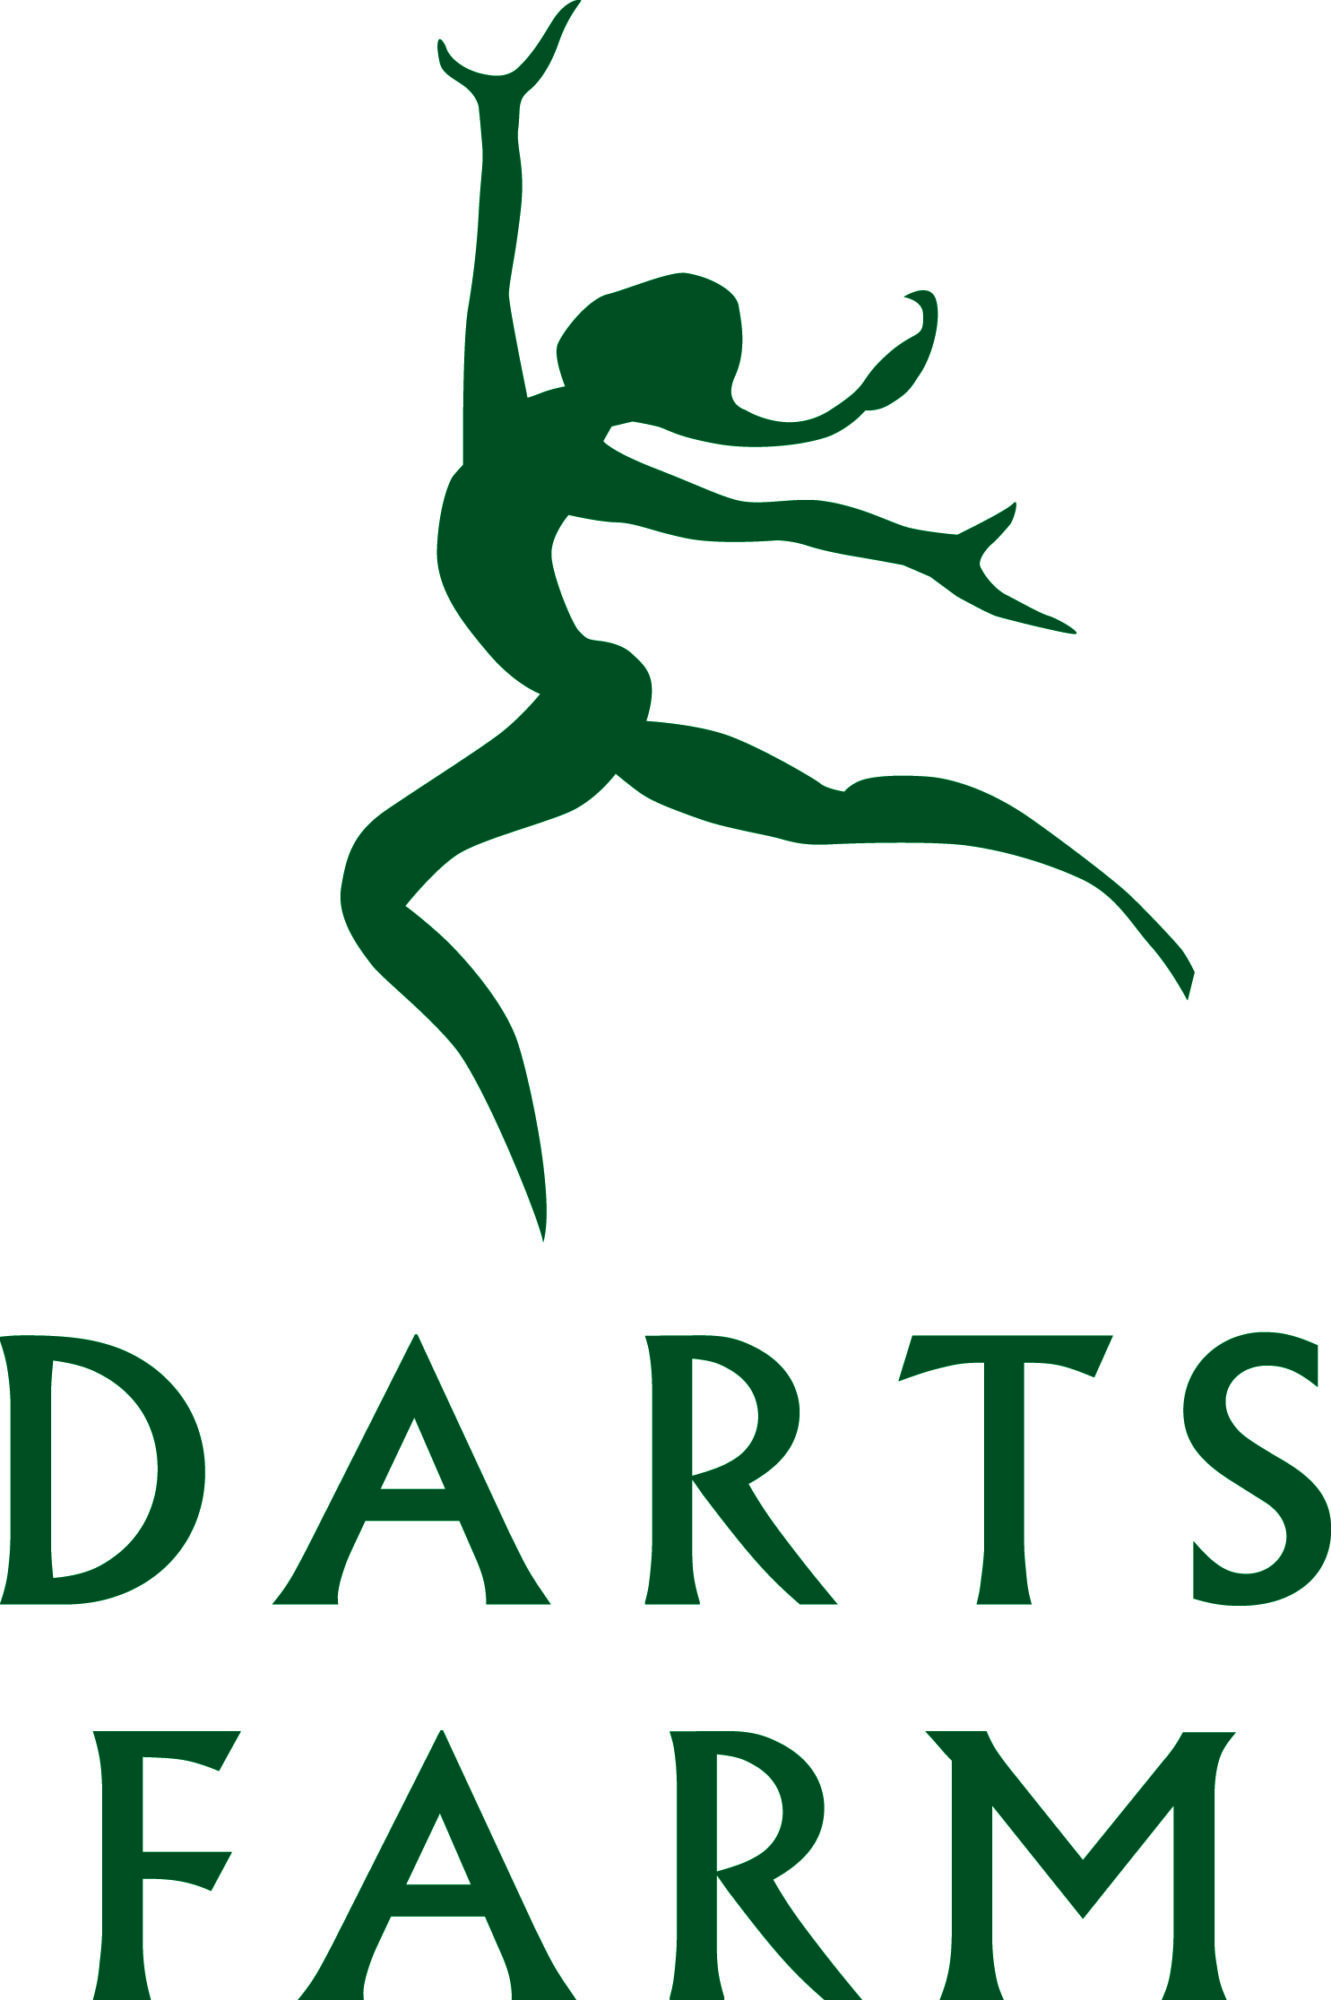 Darts Farm Logo